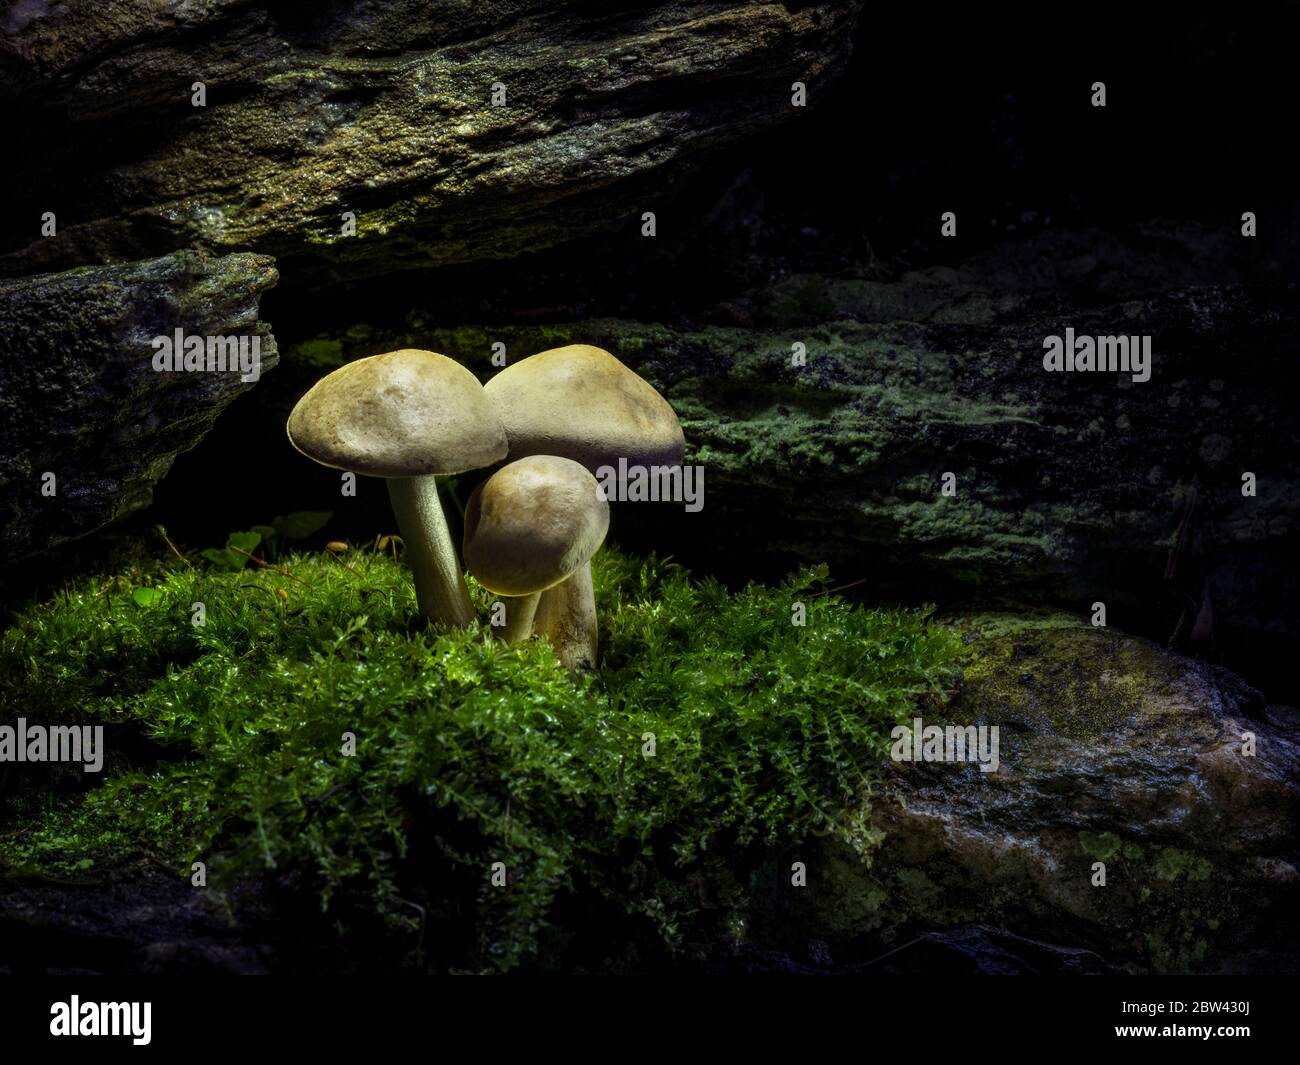 Three mushrooms on rocky ledge at night Stock Photo